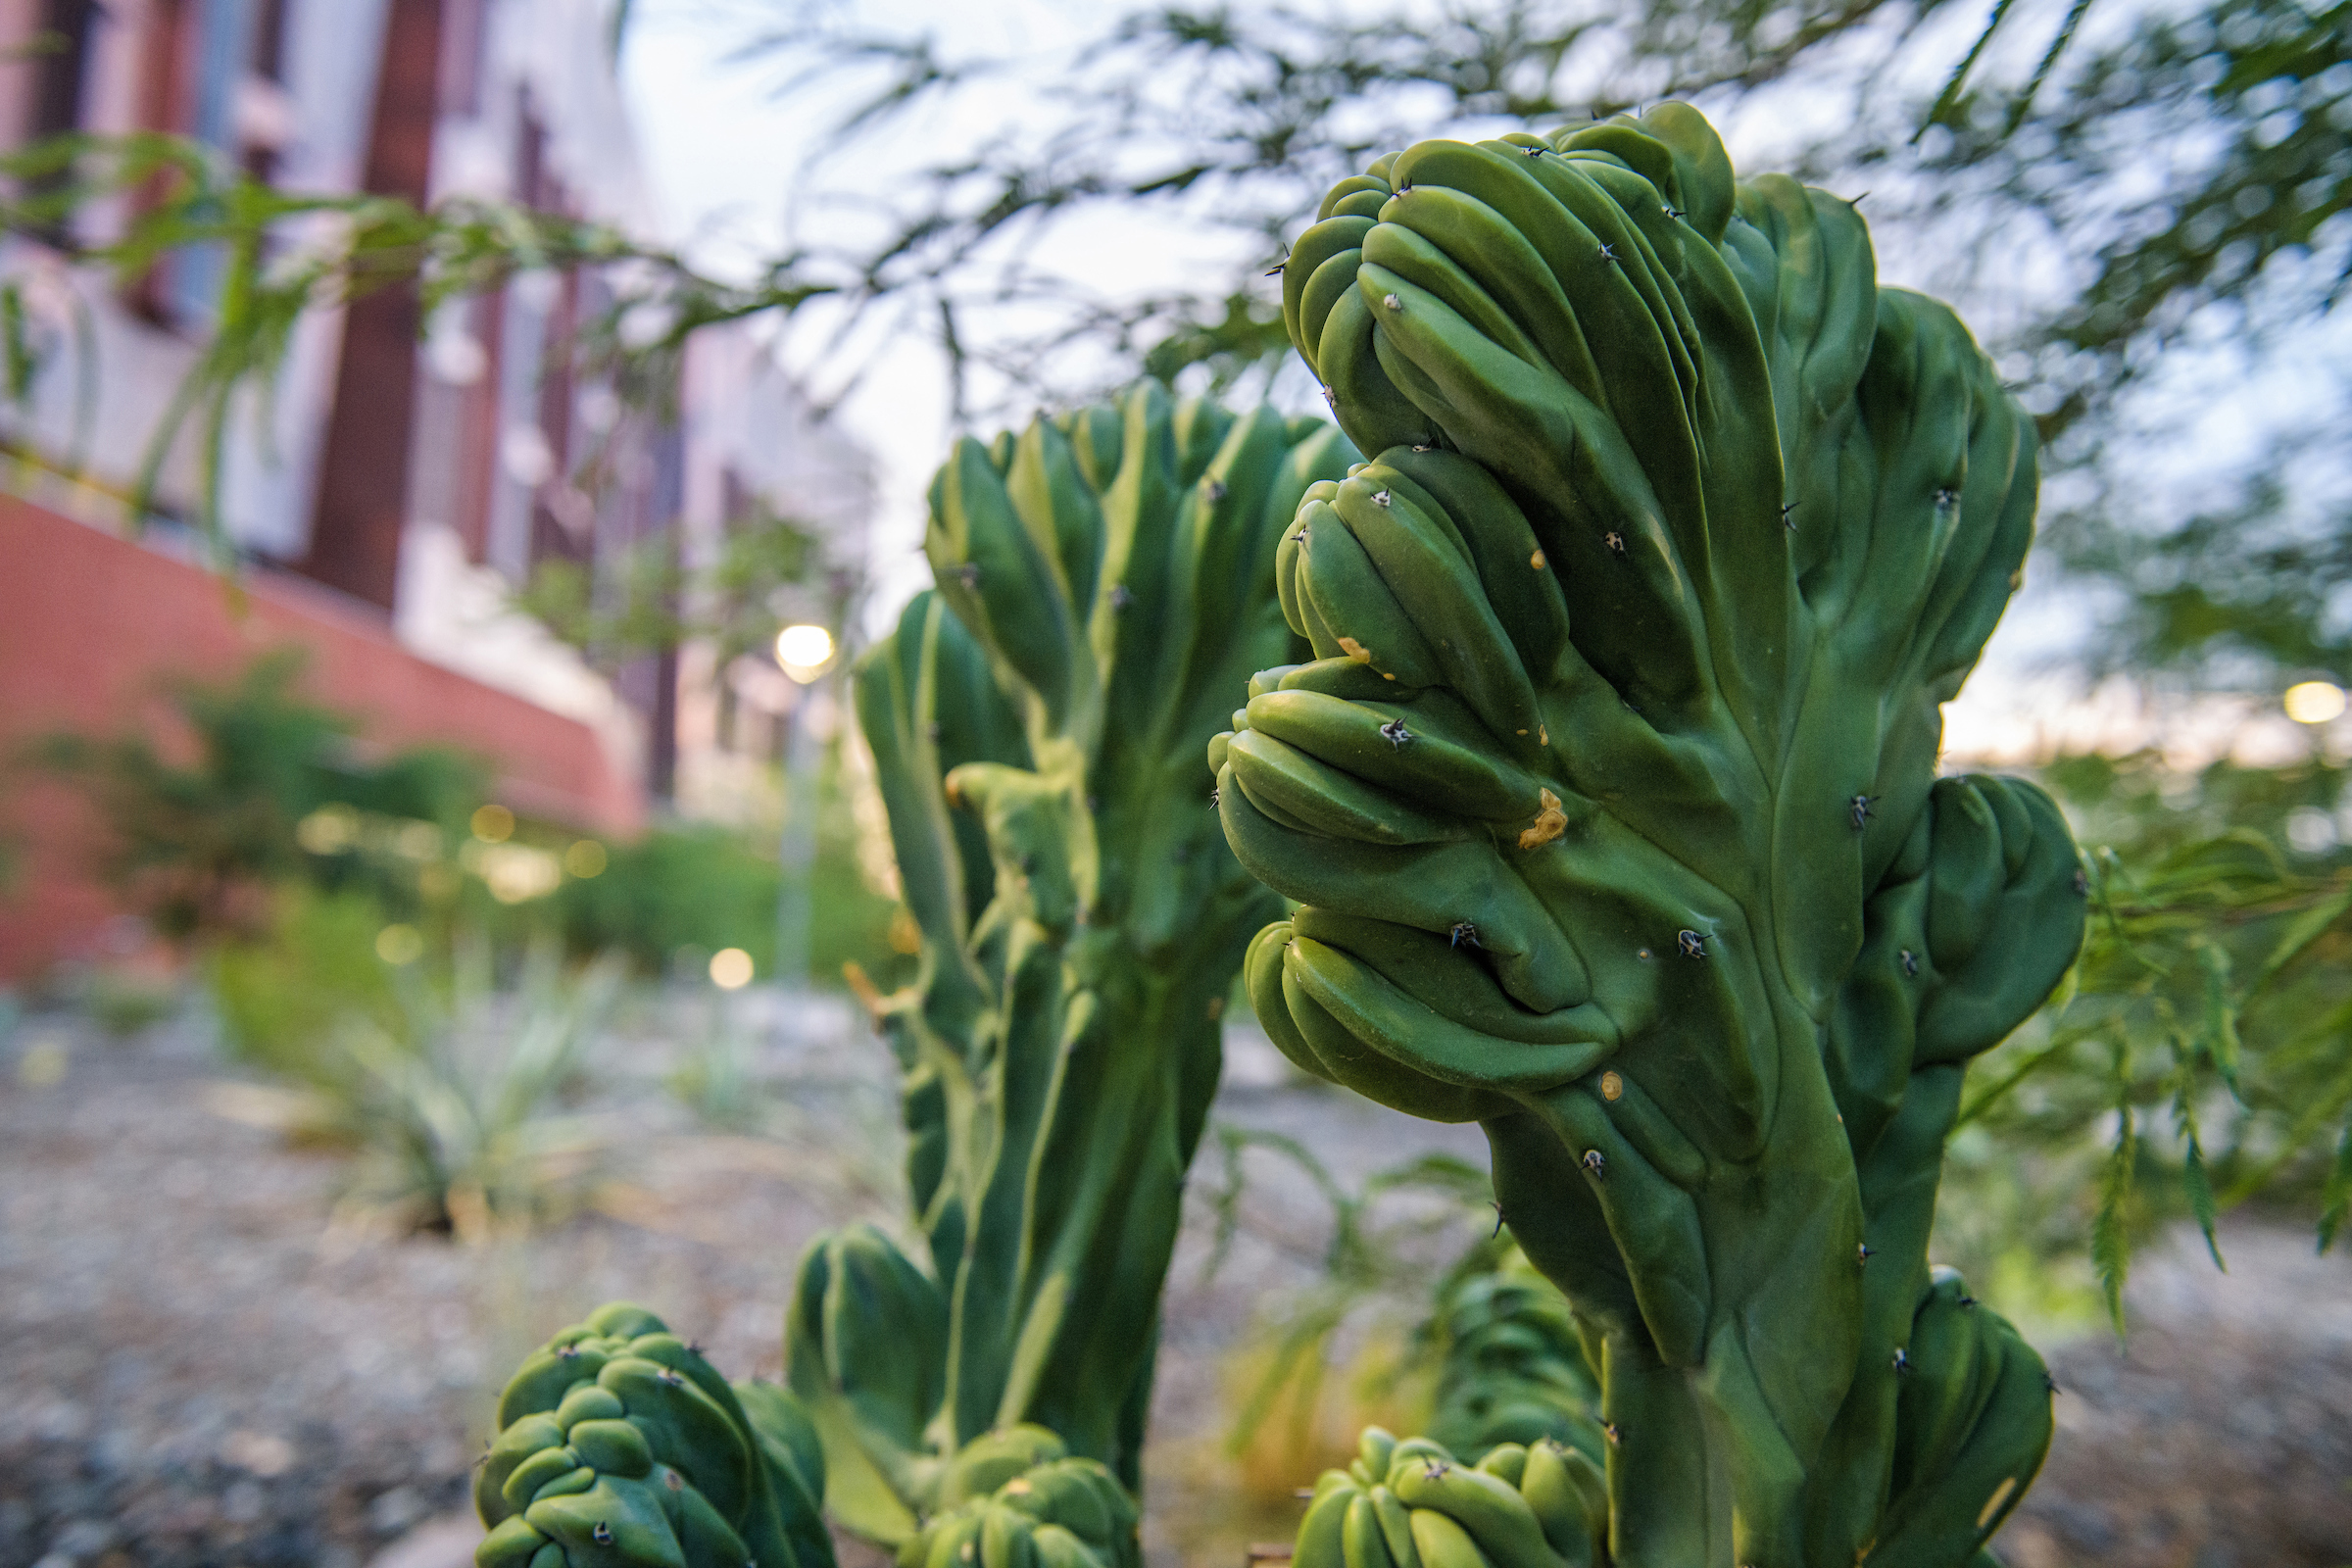 Crested cactus garden